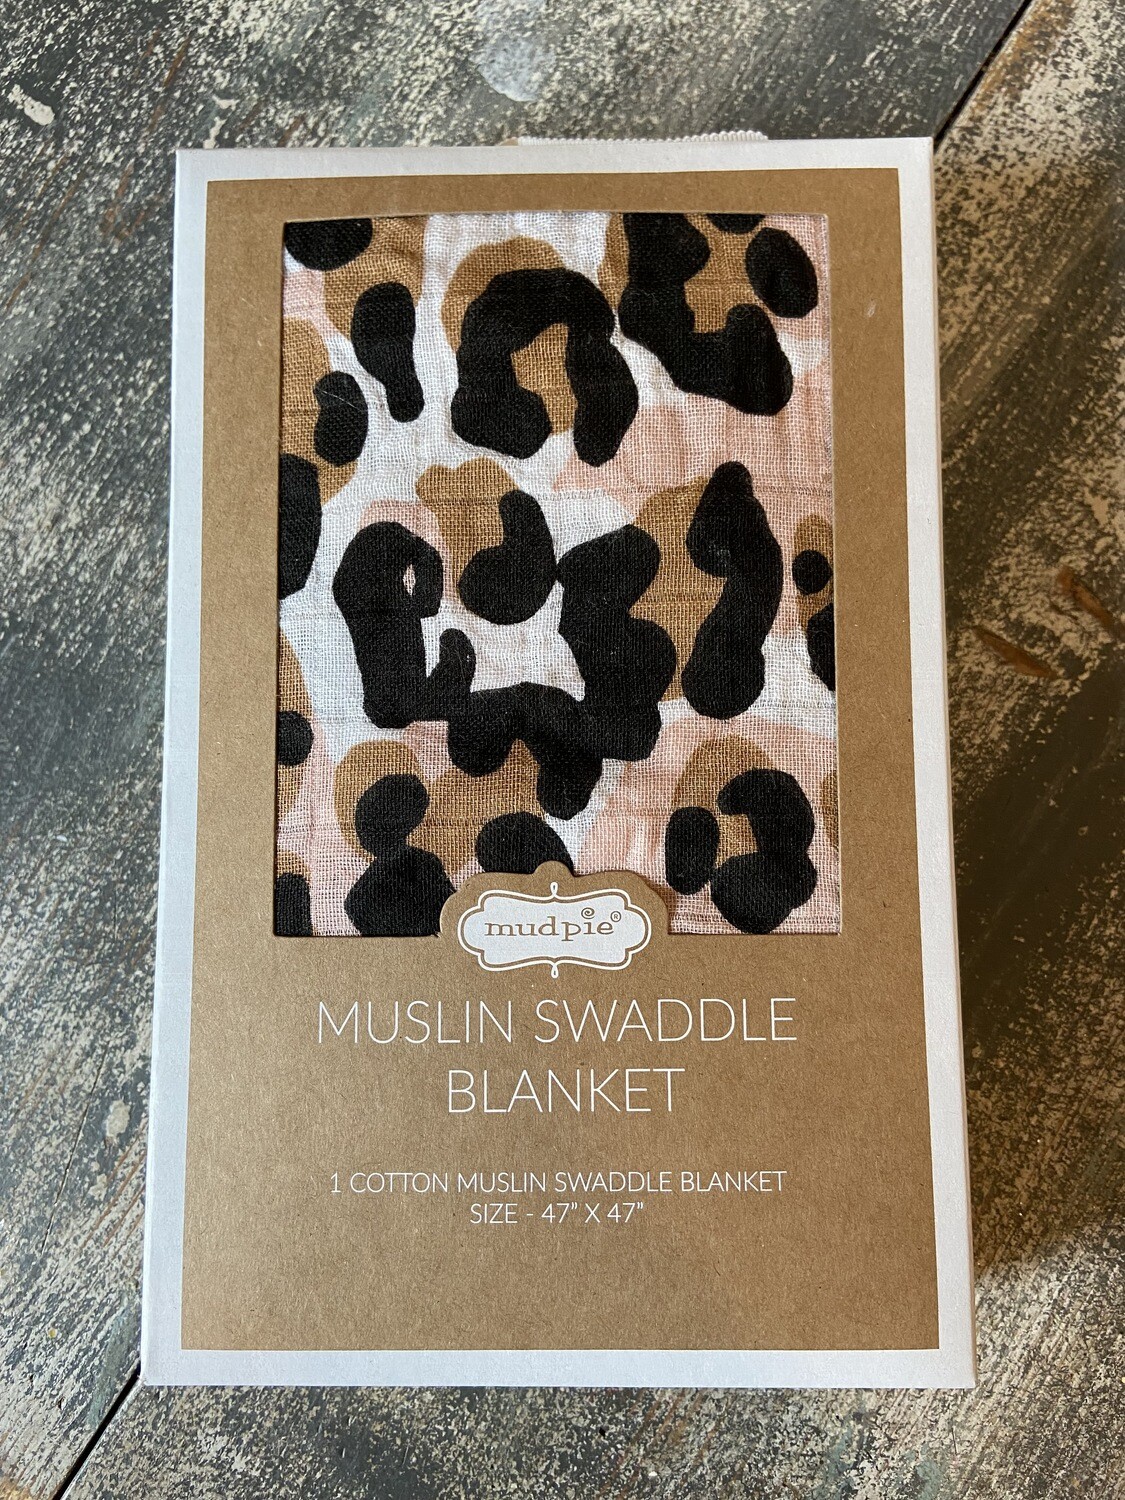 Leopard Swaddle Blanket